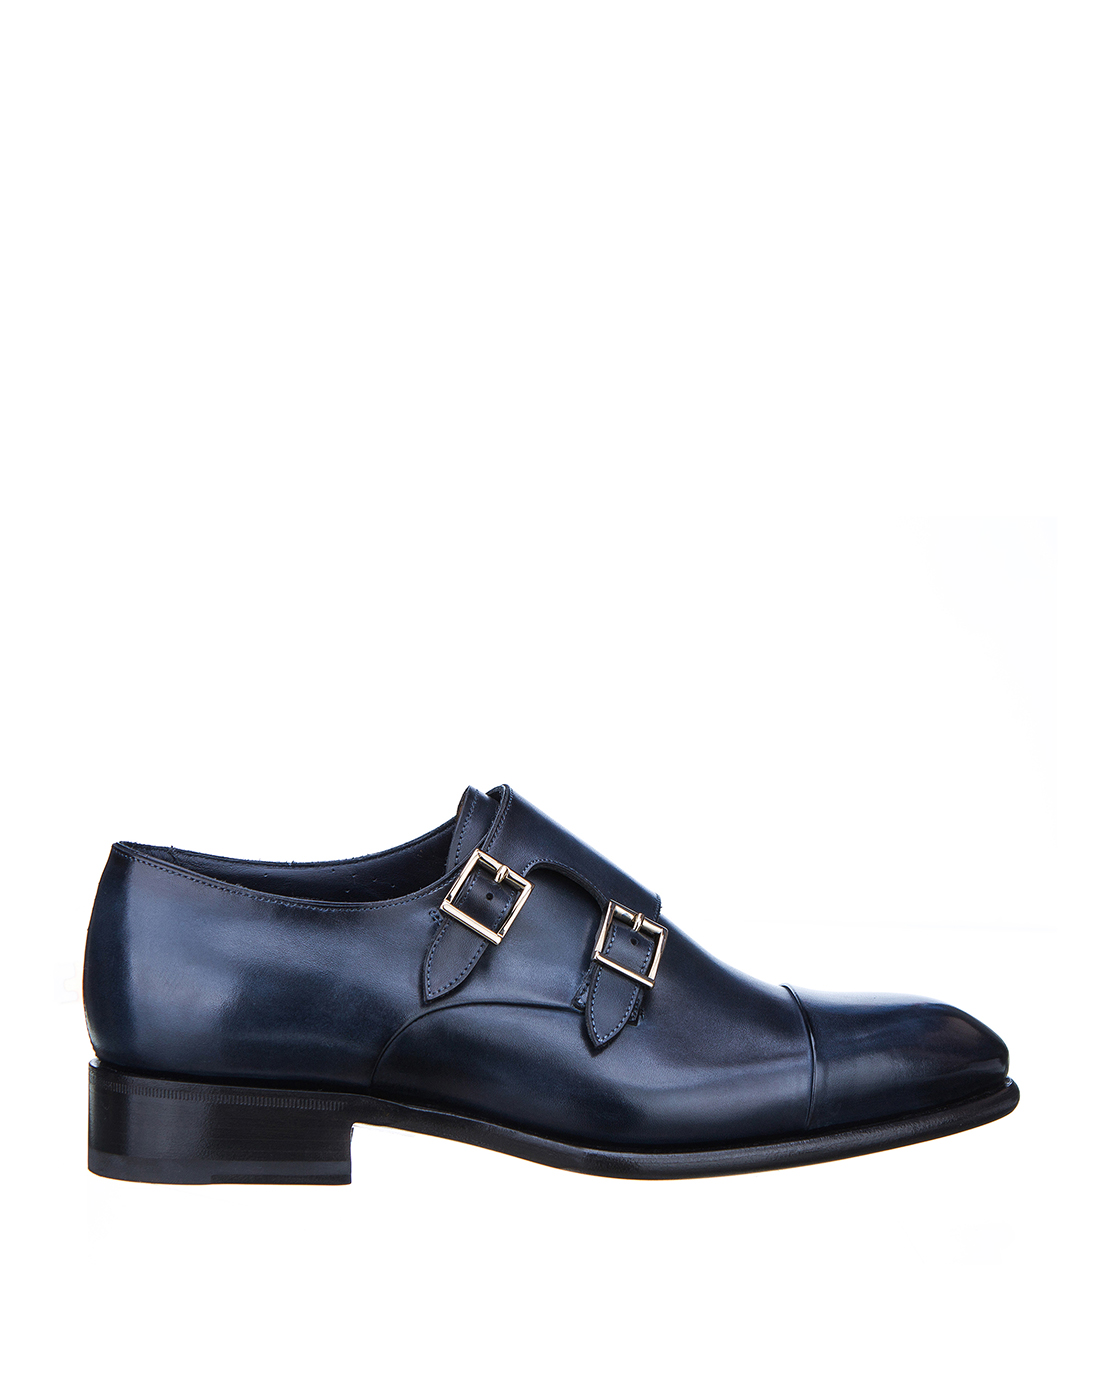 Туфли мужские синие  Santoni S11652-1